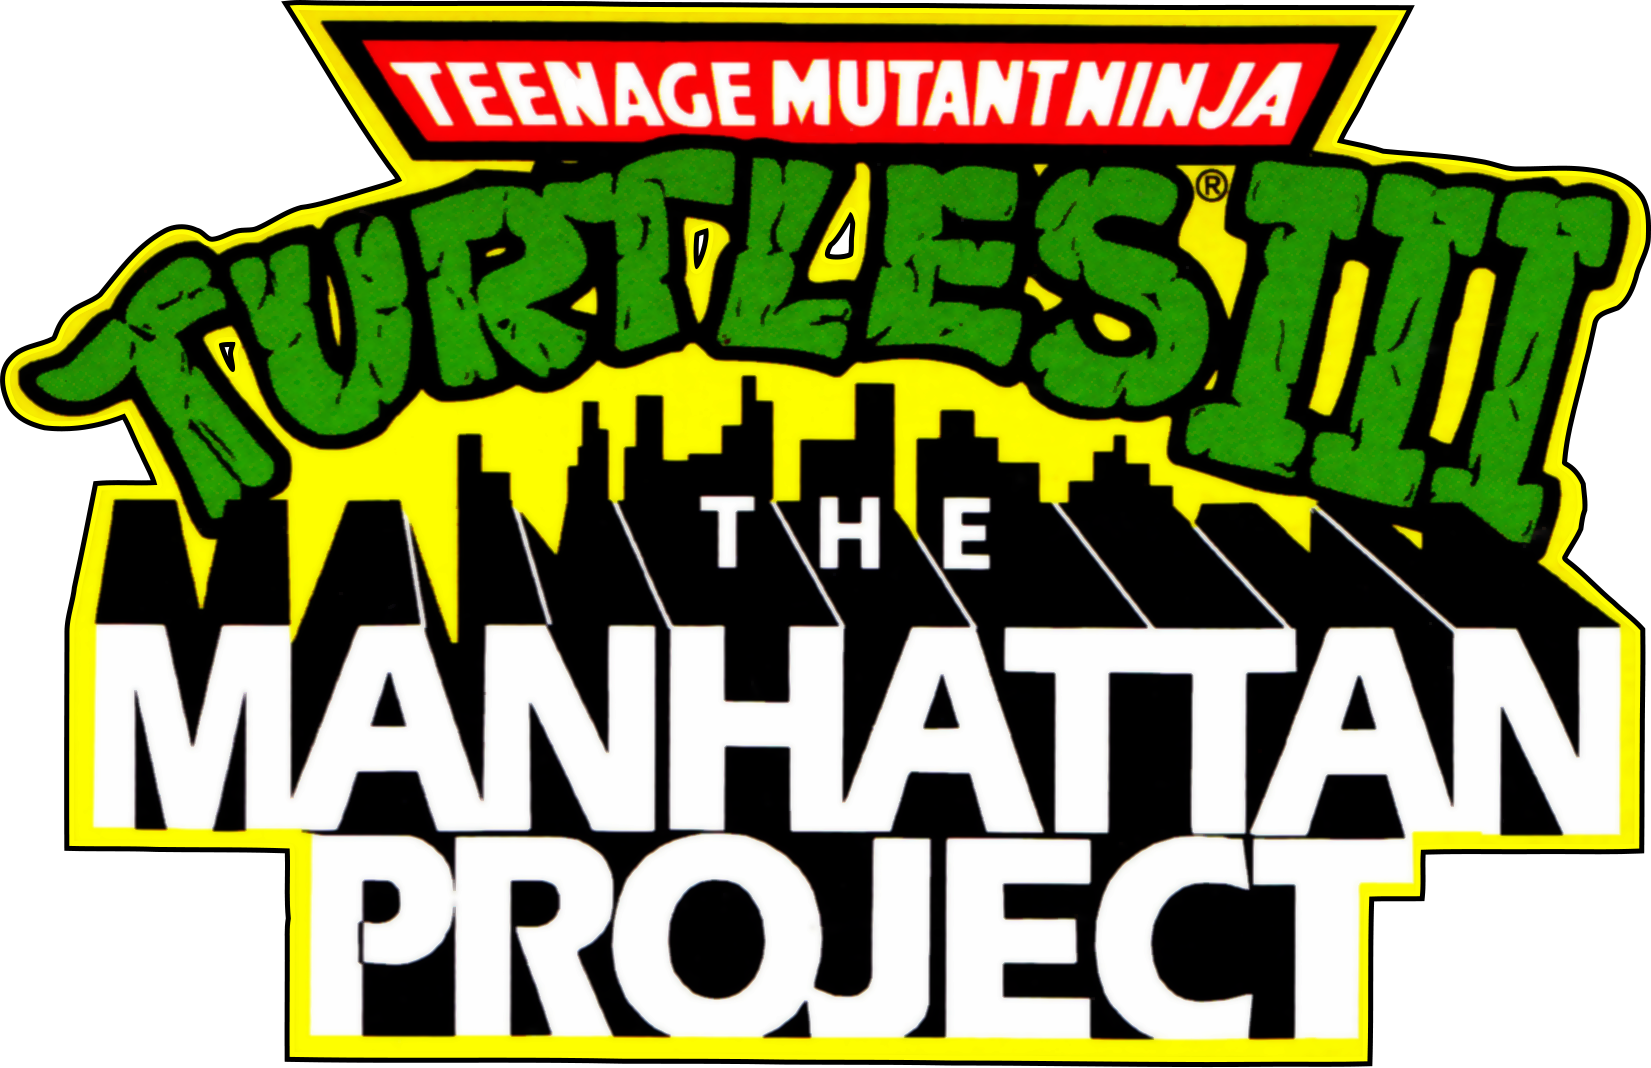 Tmnt manhattan. TMNT 3 the Manhattan Project NES. TMNT 3 Manhattan Project. Teenage Mutant Ninja Turtles Manhattan Project. Teenage Mutant Ninja Turtles 3 the Manhattan Project.